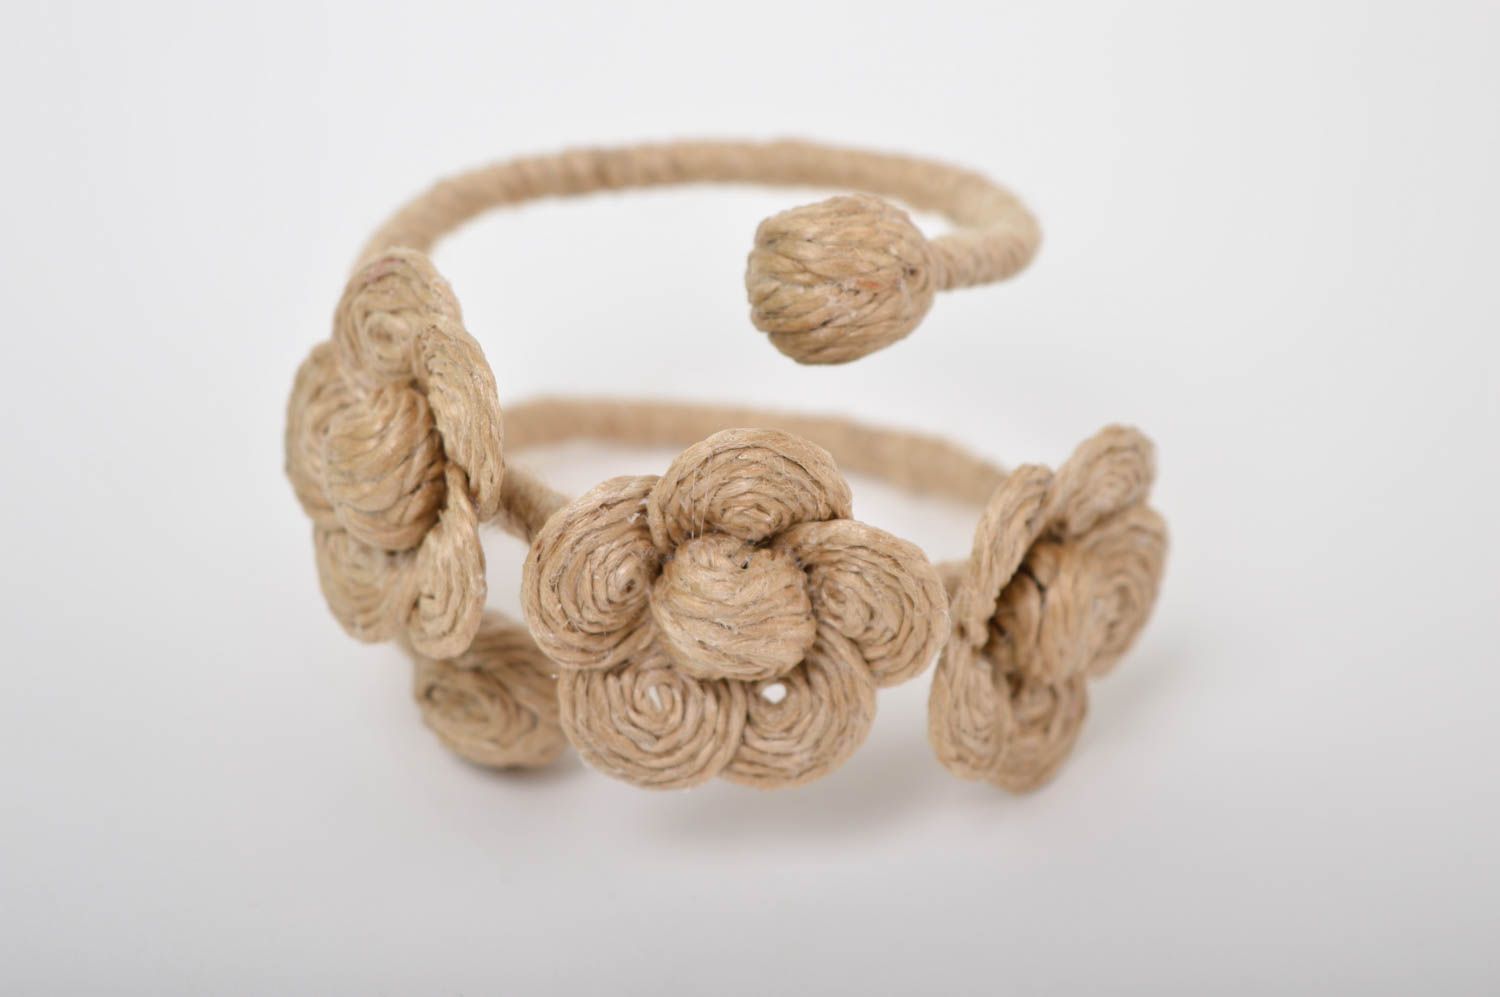 Handmade bracelet designer jewelry unusual accessory gift for her gift ideas photo 3